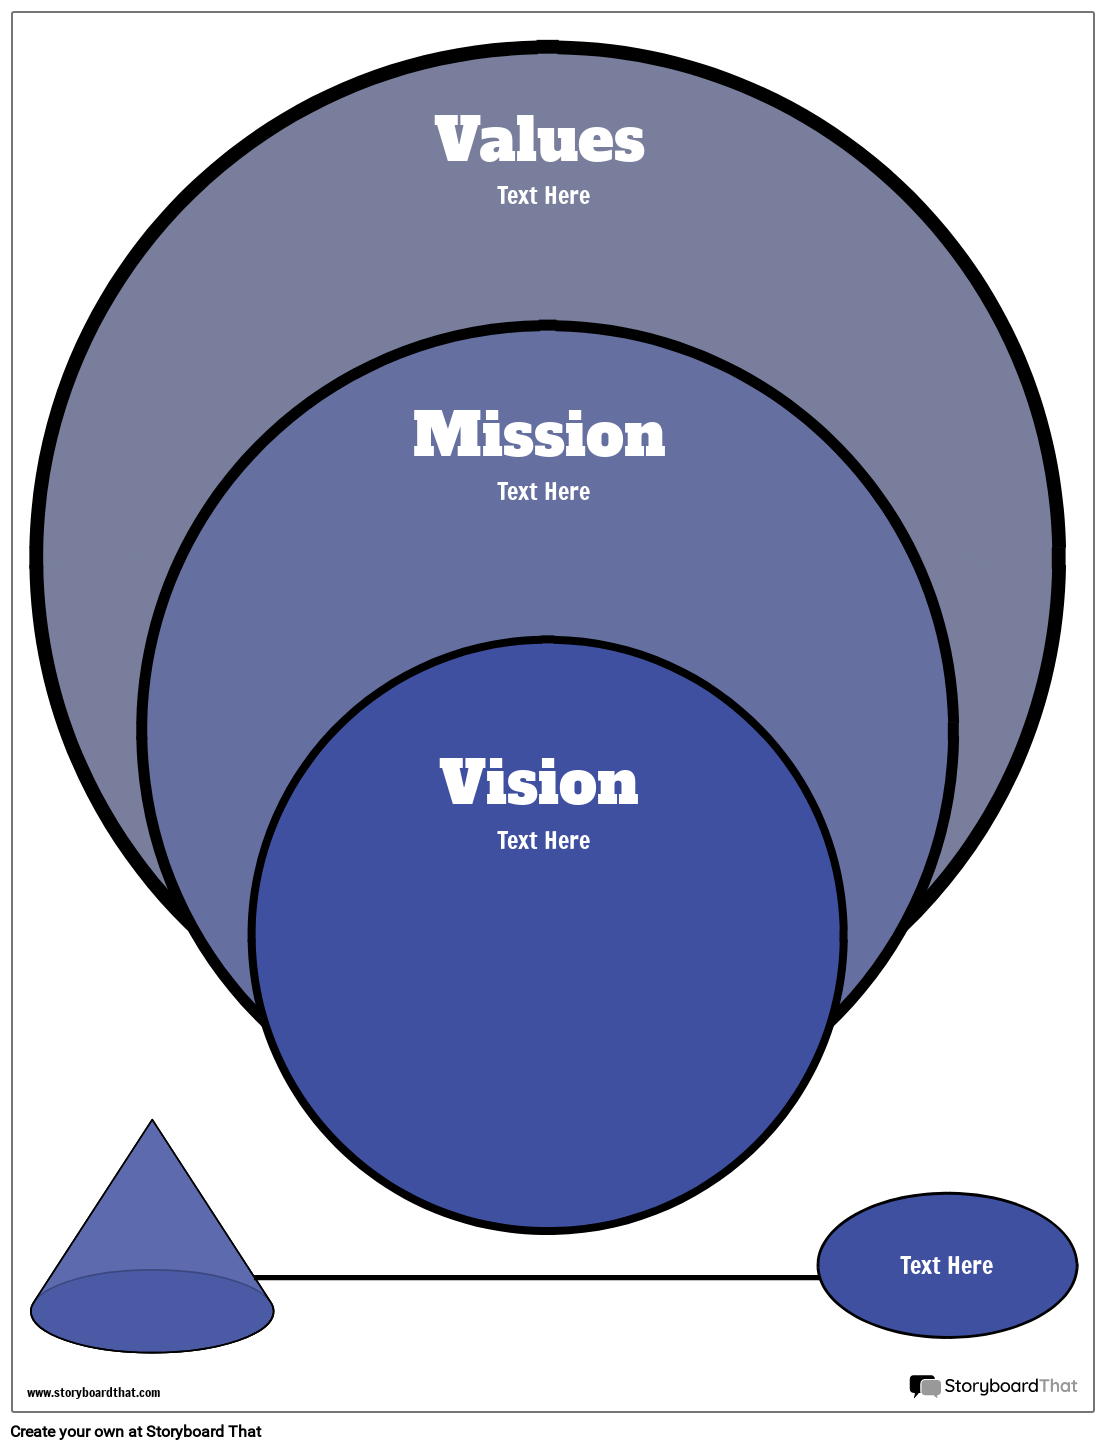 Company Vision 2